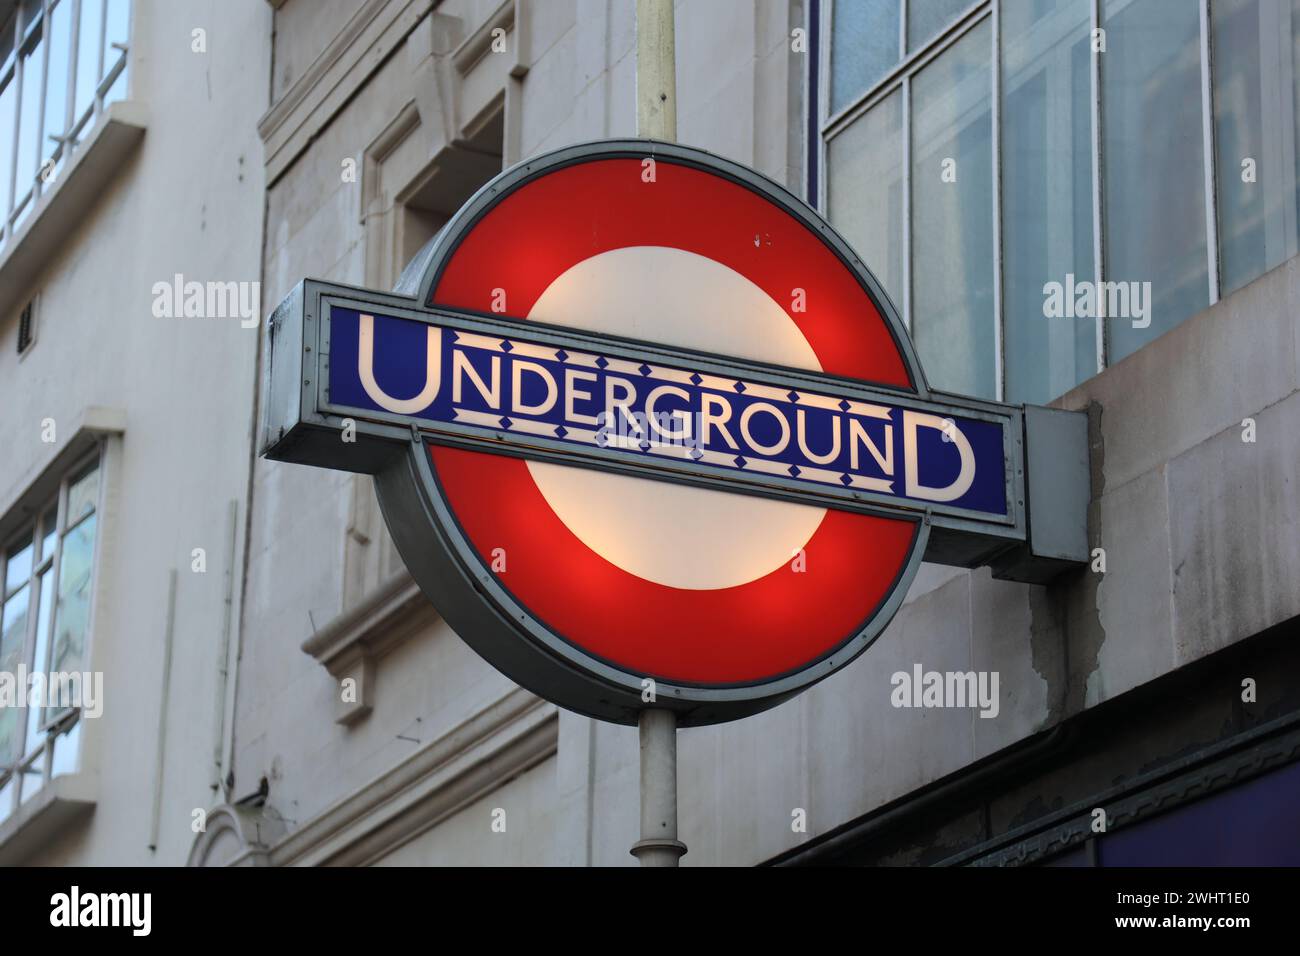 Holborn Station London Underground rond panneau Banque D'Images